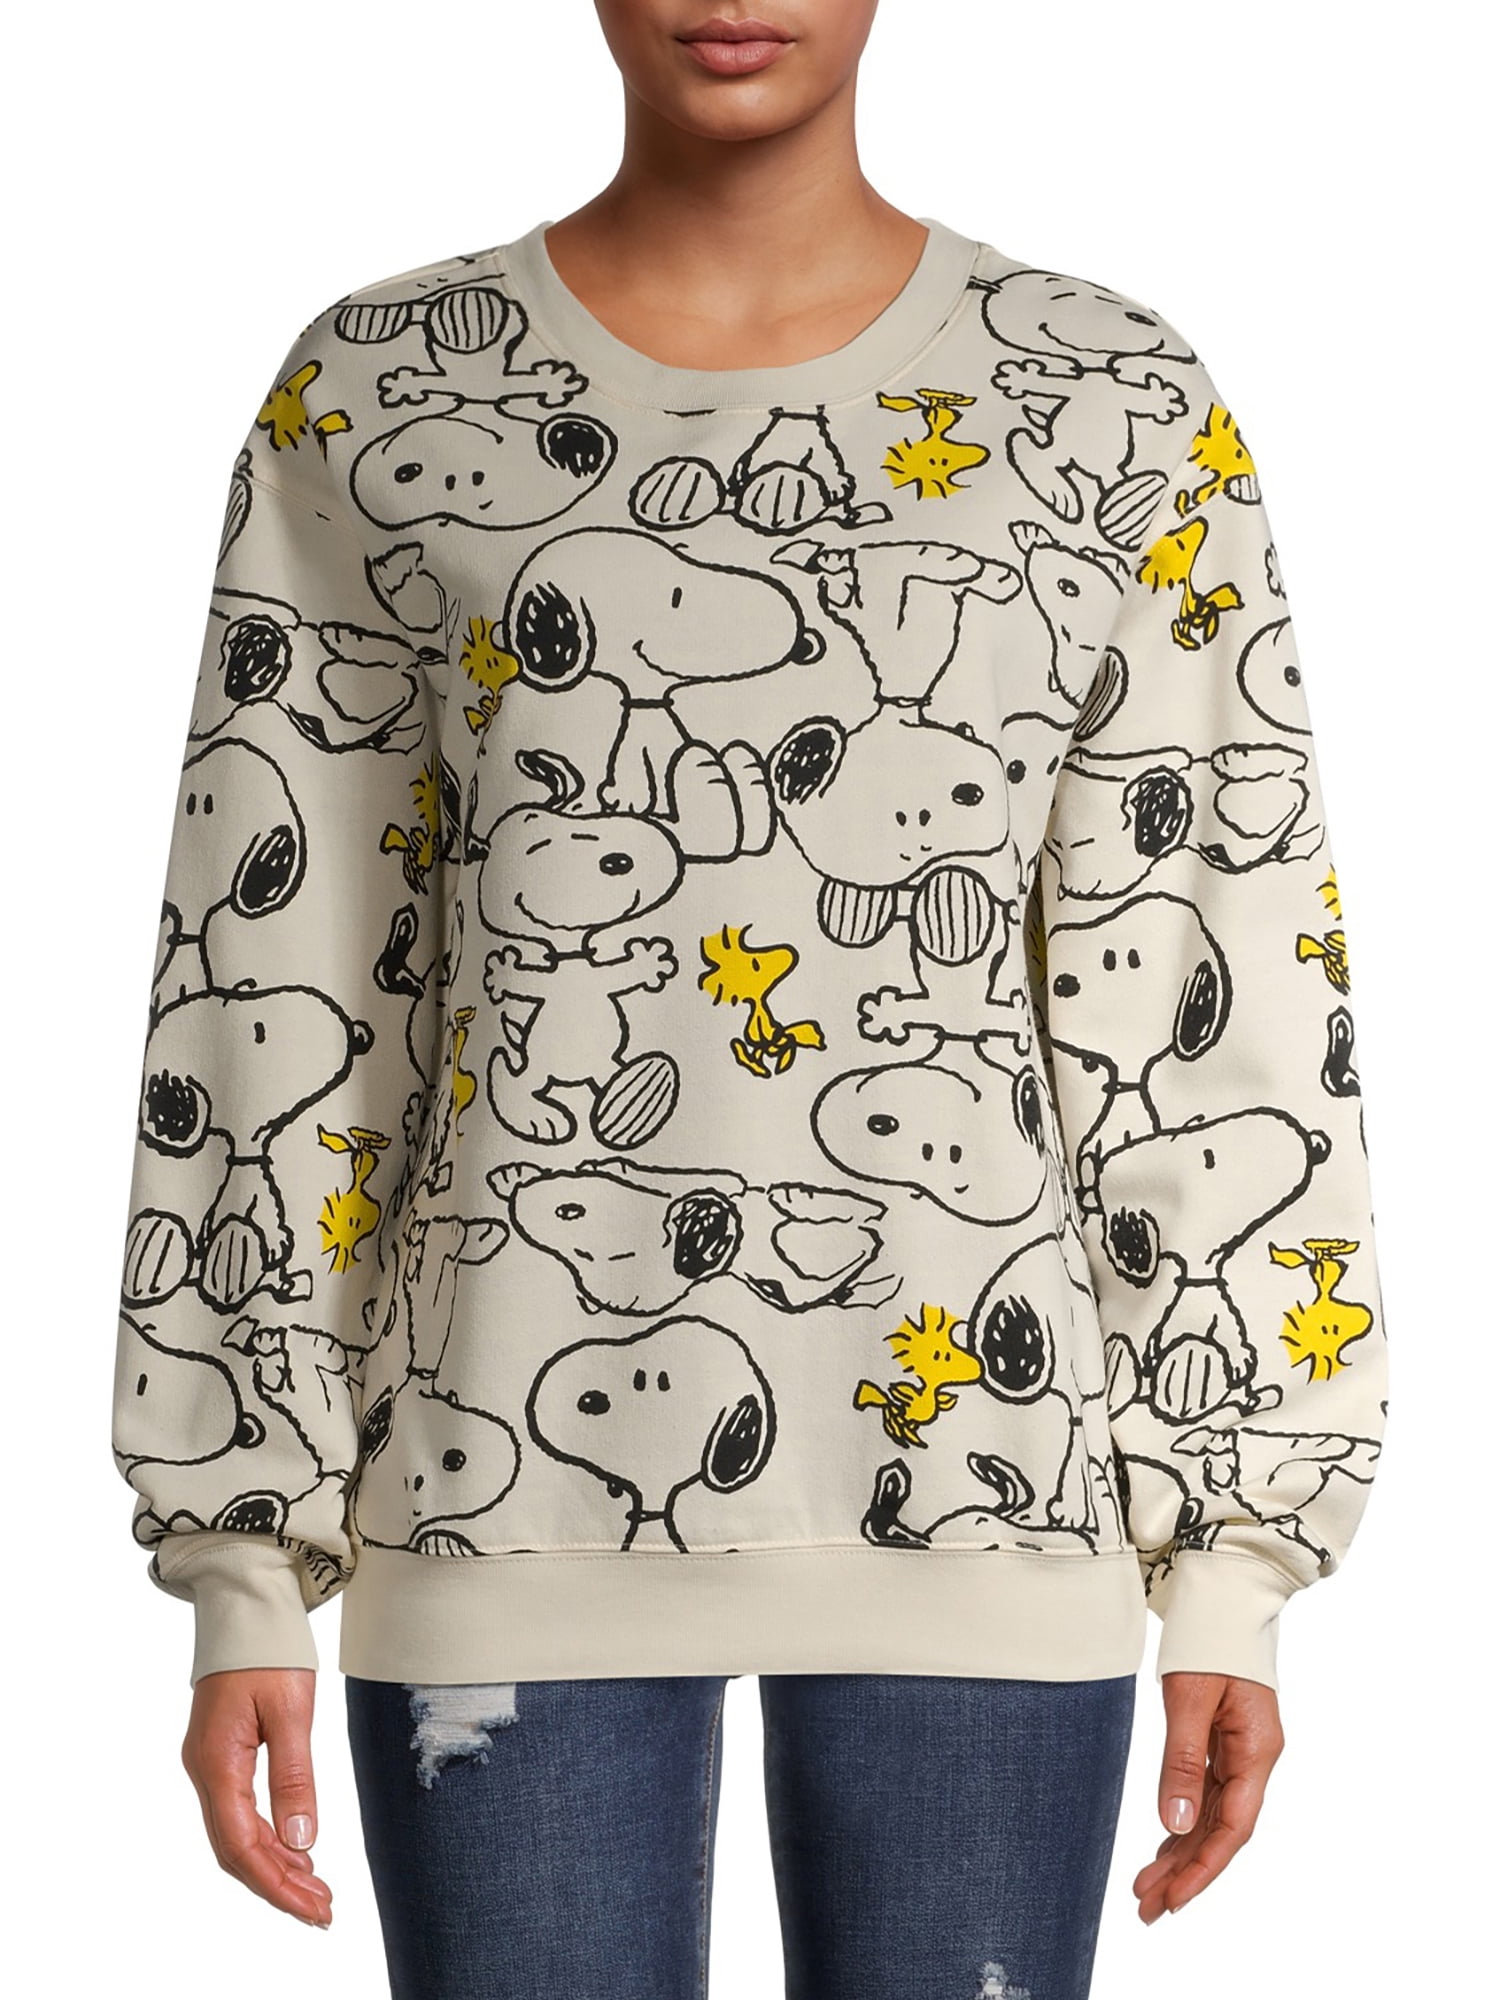 Peanuts Juniors Snoopy Tis The Season Graphic Sweatshirt w/Beanie 